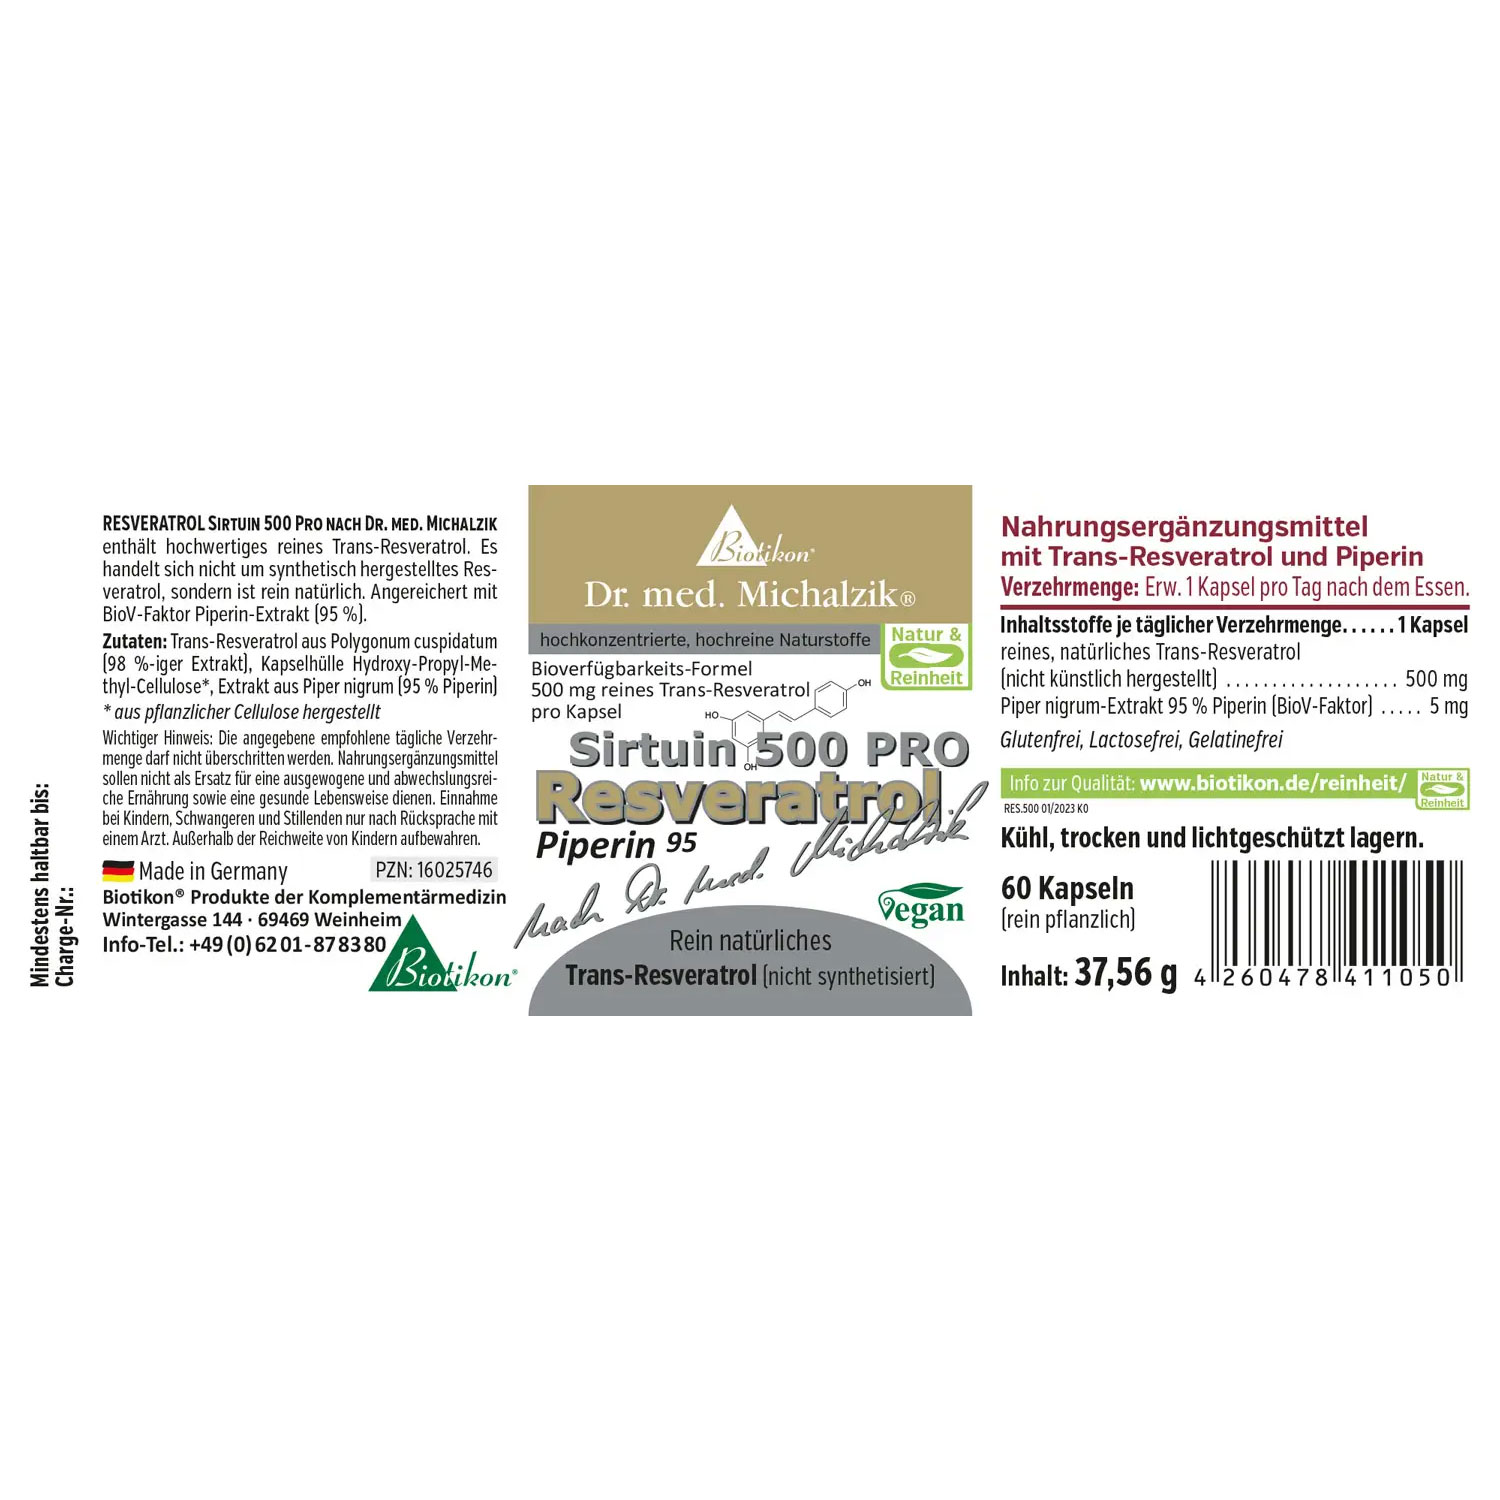 Resveratrol 500 PRO von Biotikon - Etikett